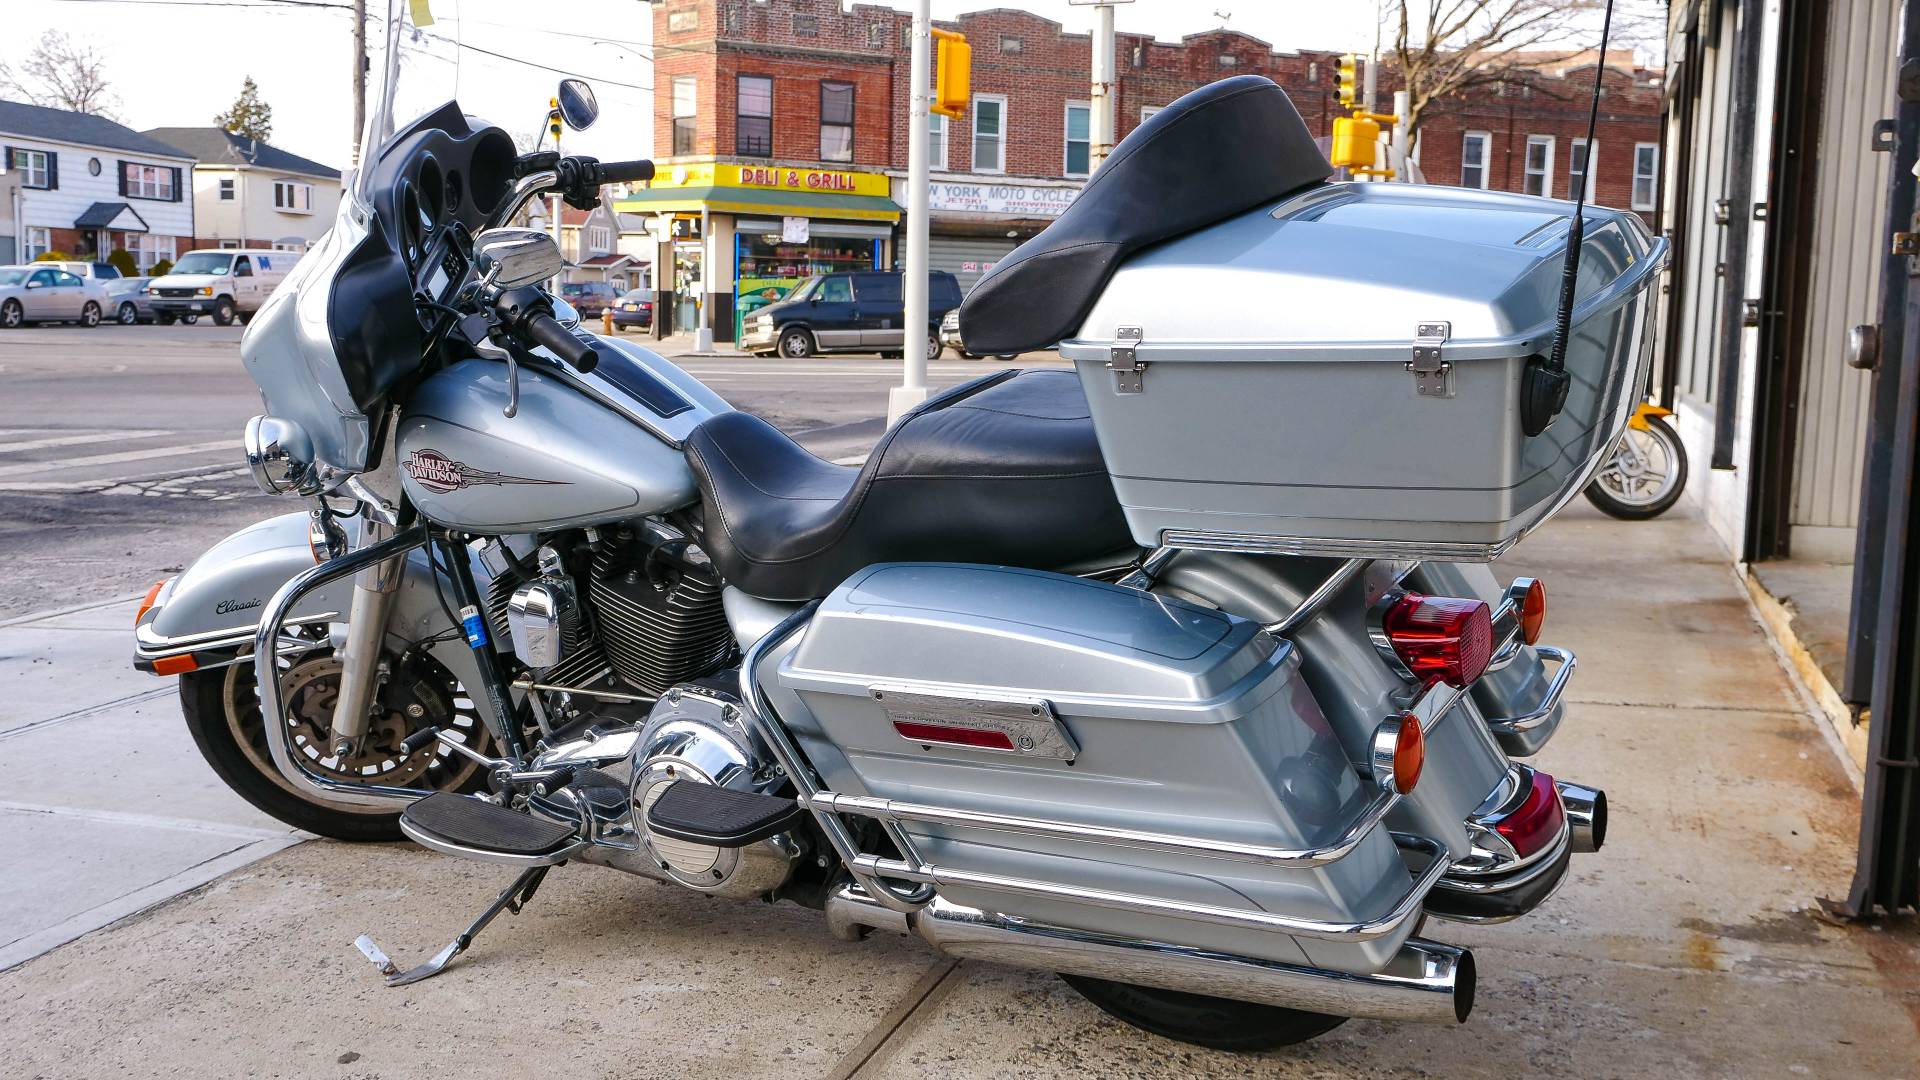 2012 Harley-Davidson Electra Glide® Classic in Oakdale, New York - Photo 15